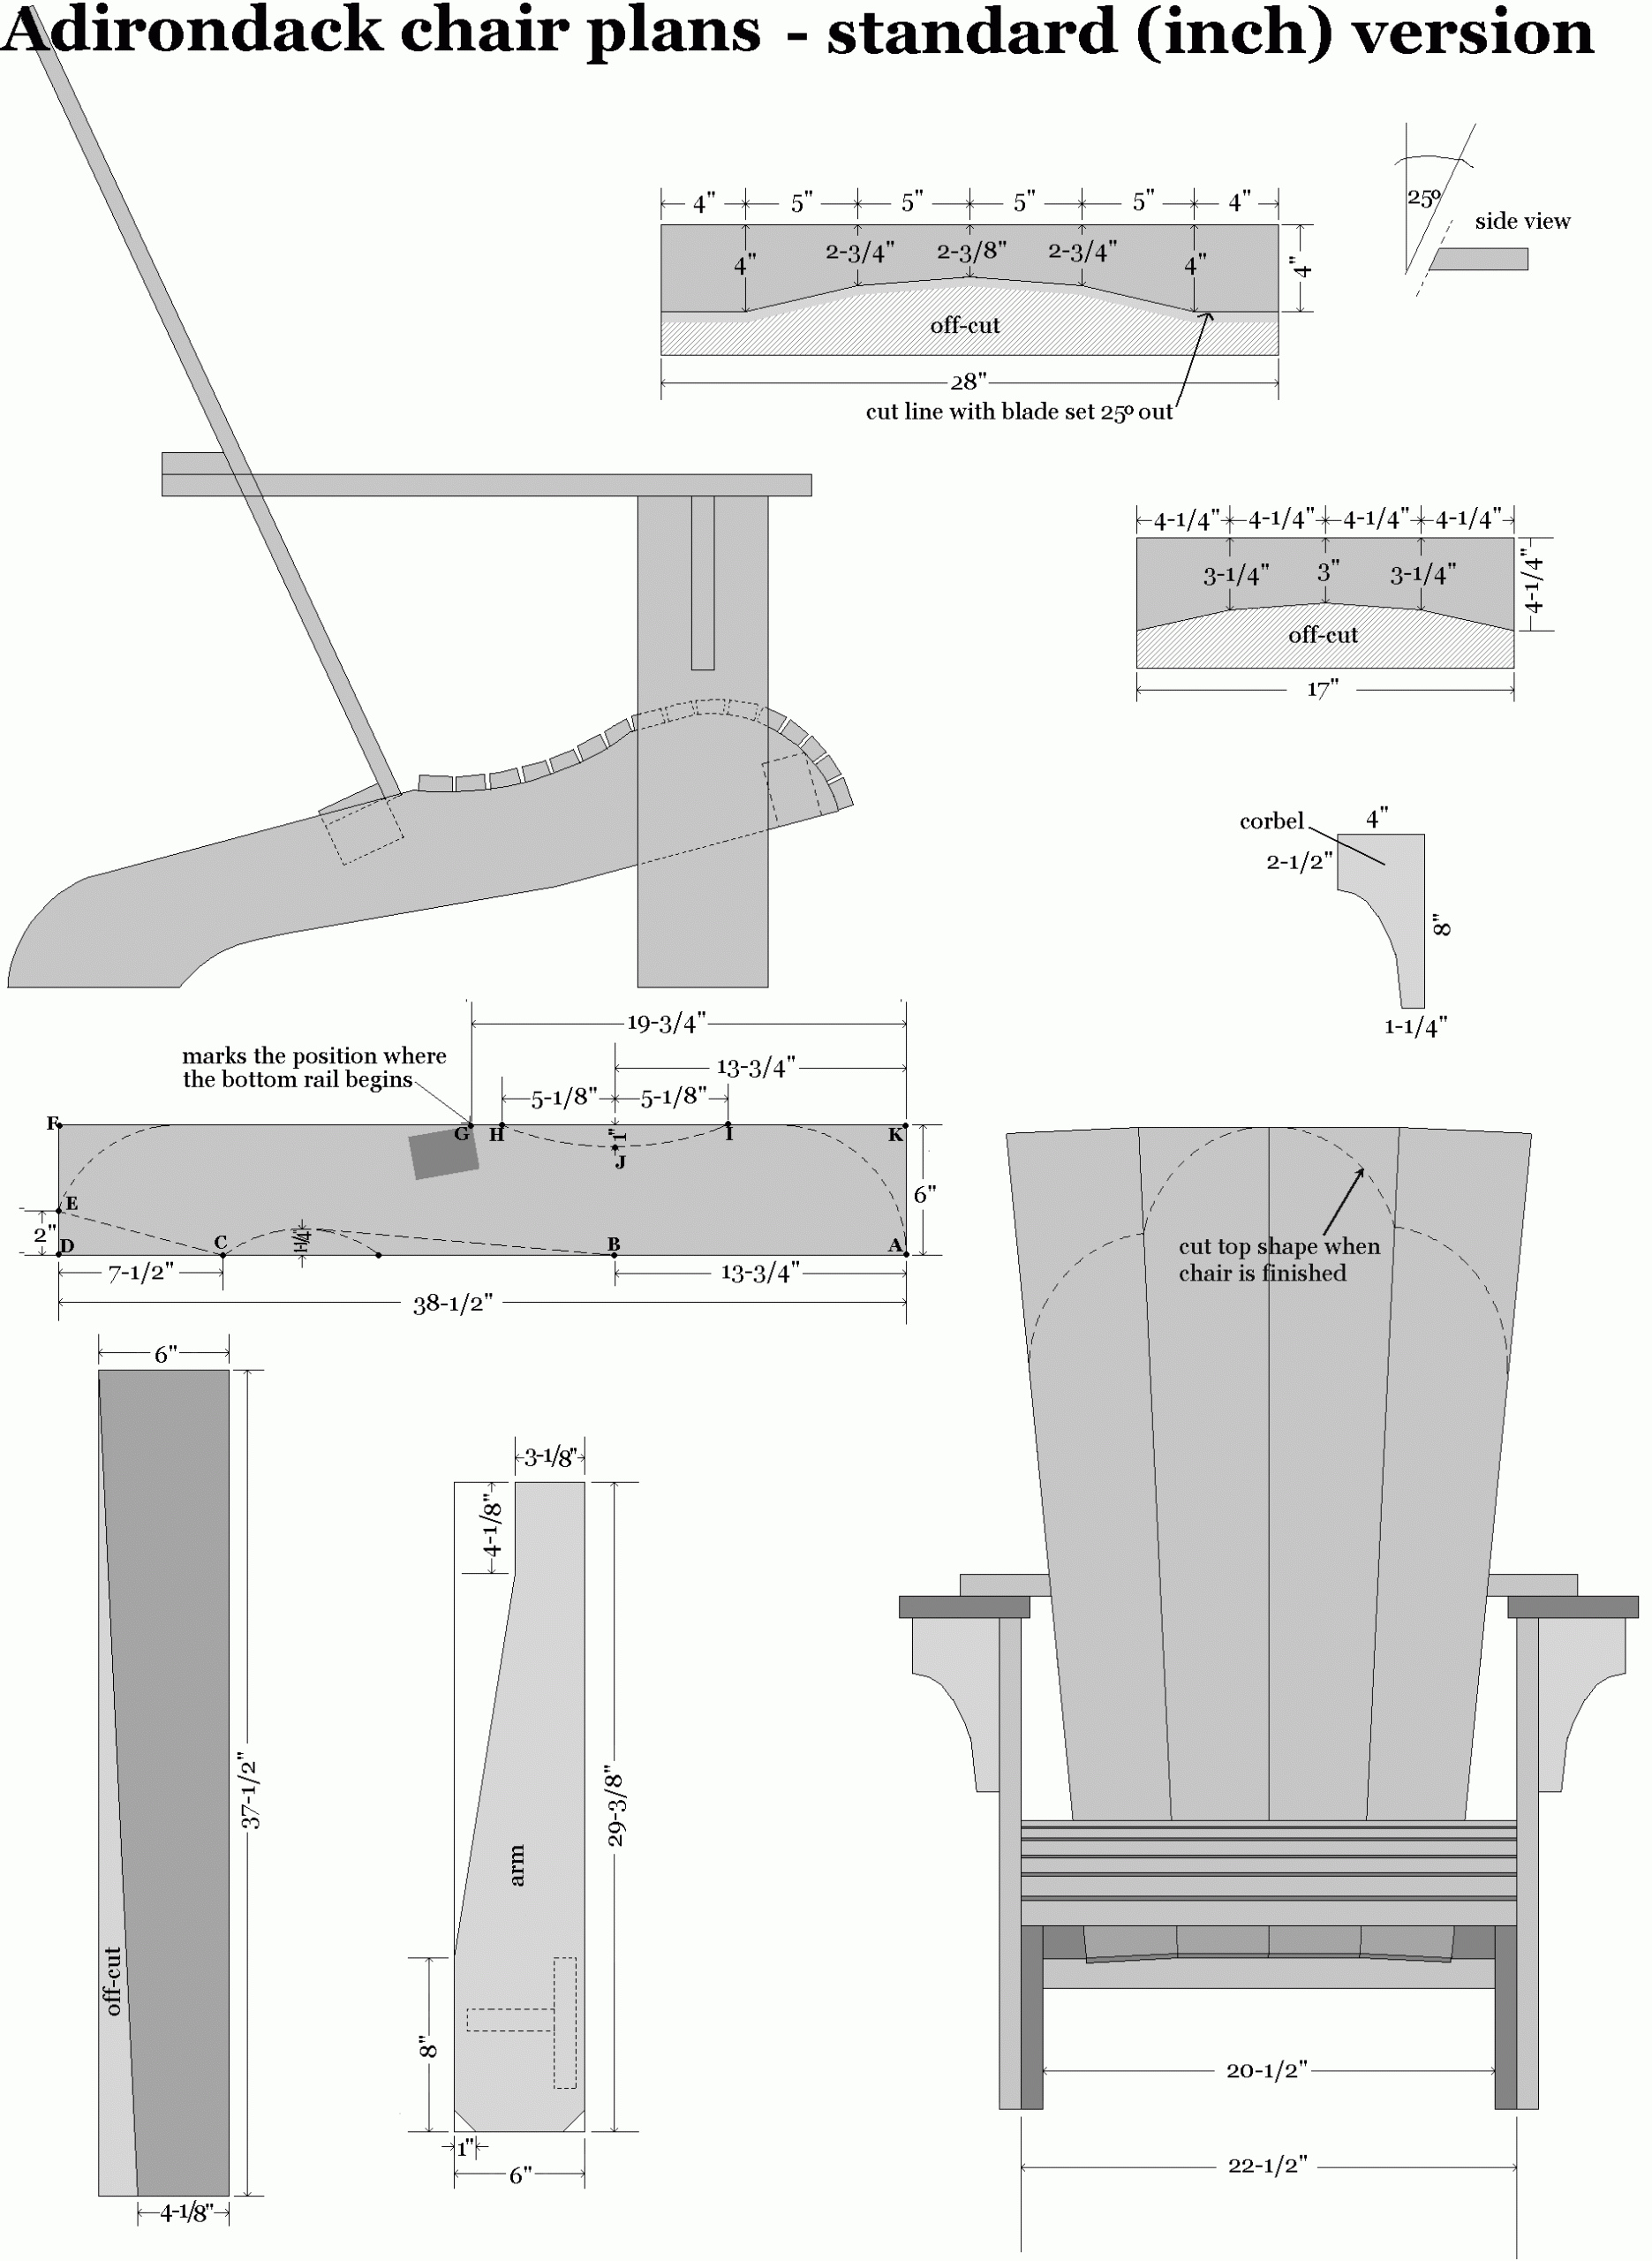 Plan Fauteuil Adirondack Unique How to Build A Cape Cod Chair